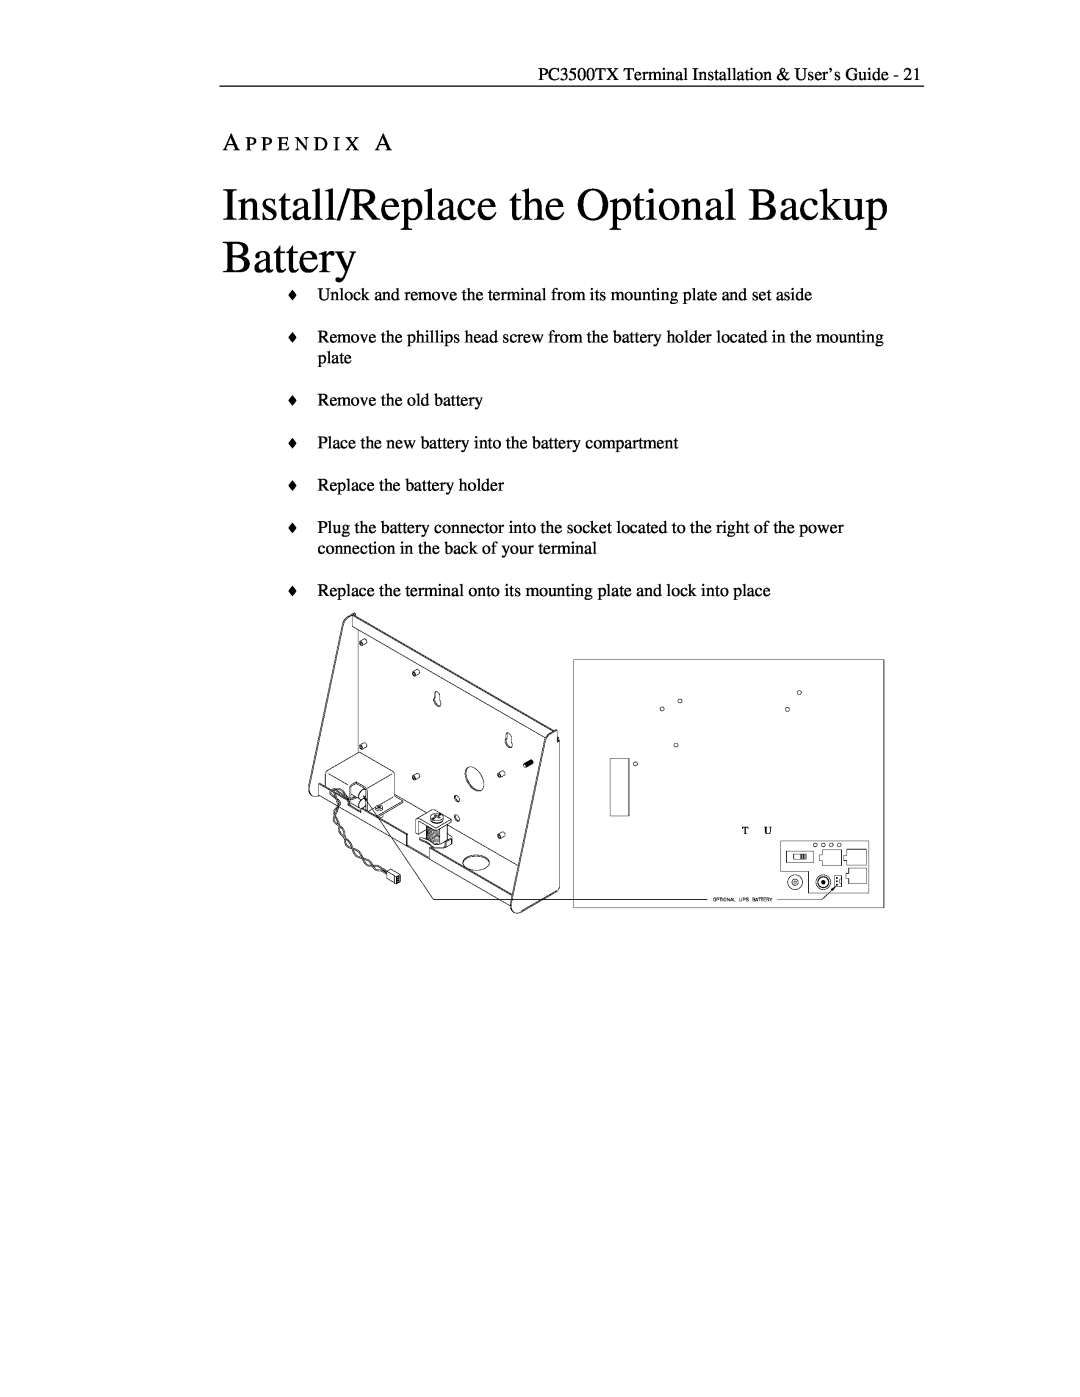 Lathem PC3500TX manual Install/Replace the Optional Backup Battery, A P P E N D I X A 